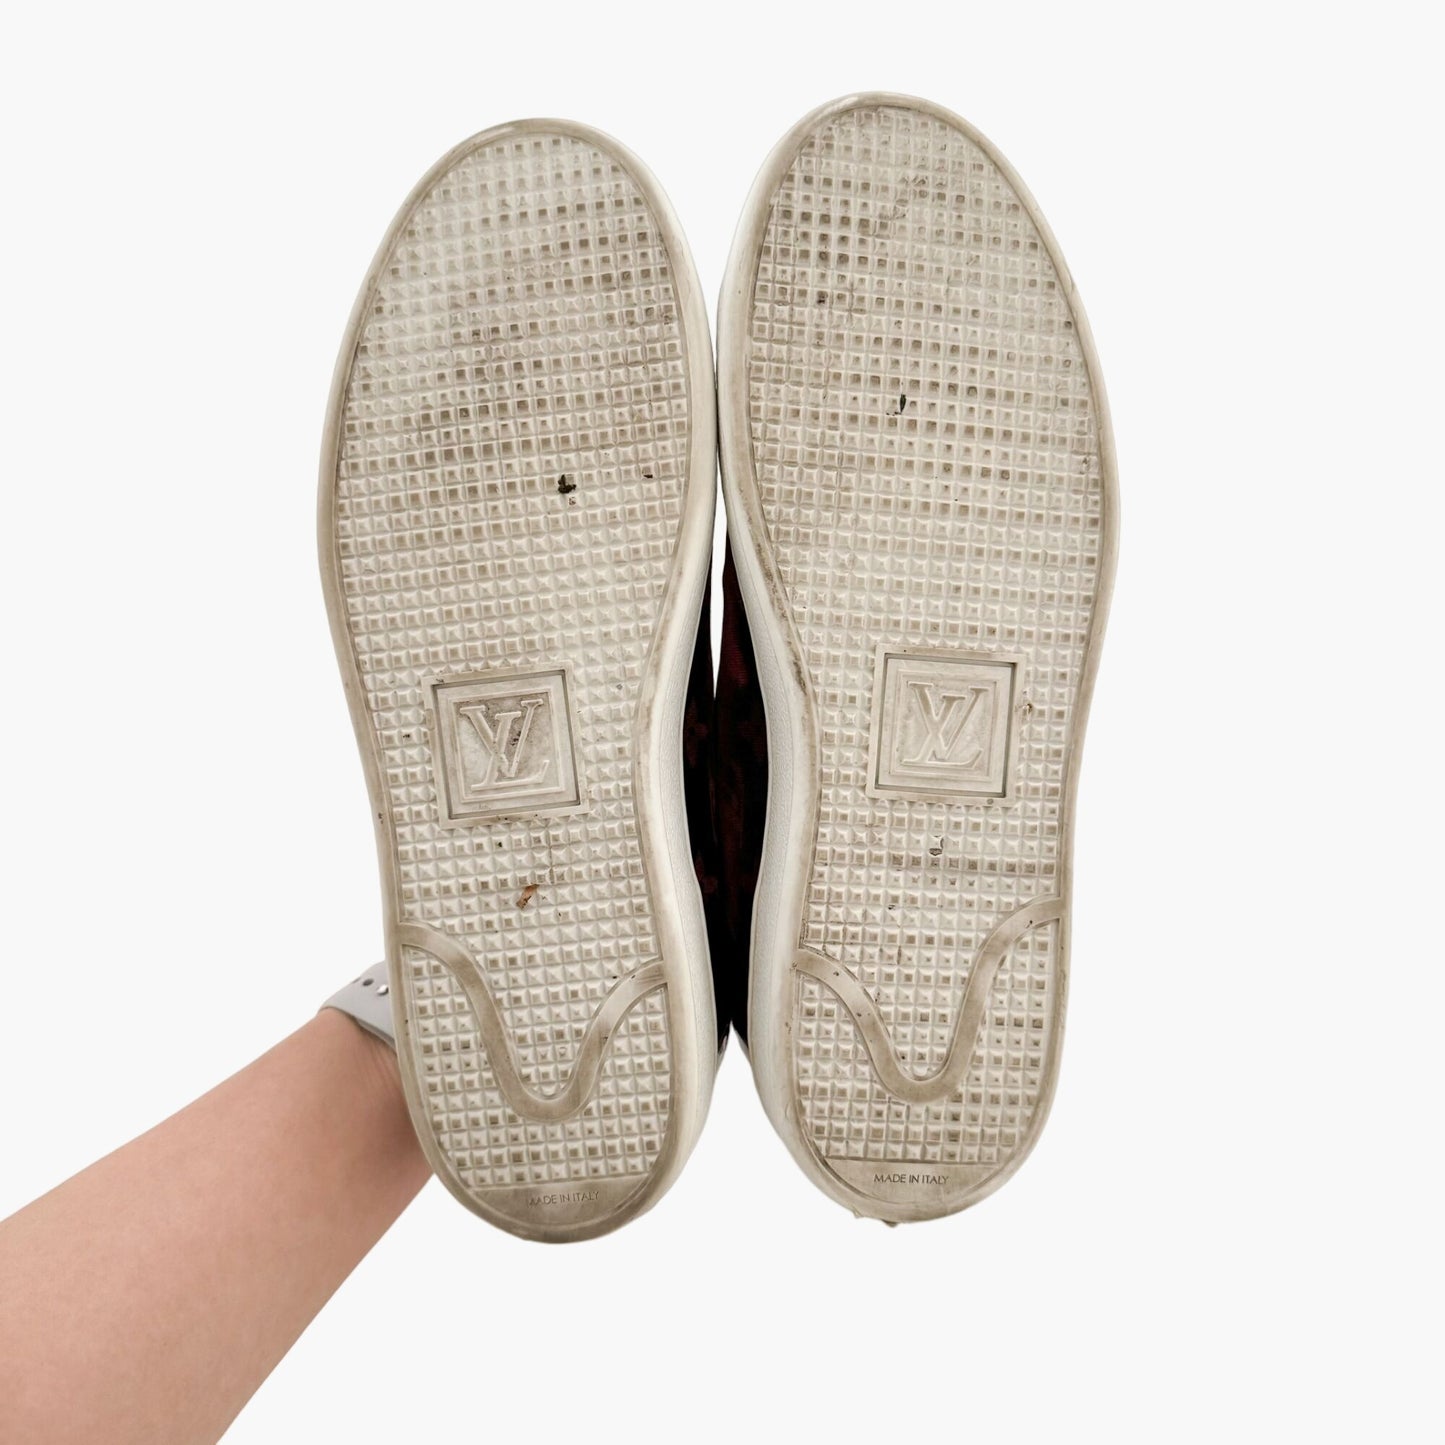 Louis Vuitton Frontrow Sneakers in Red Velvet Monogram Size 39